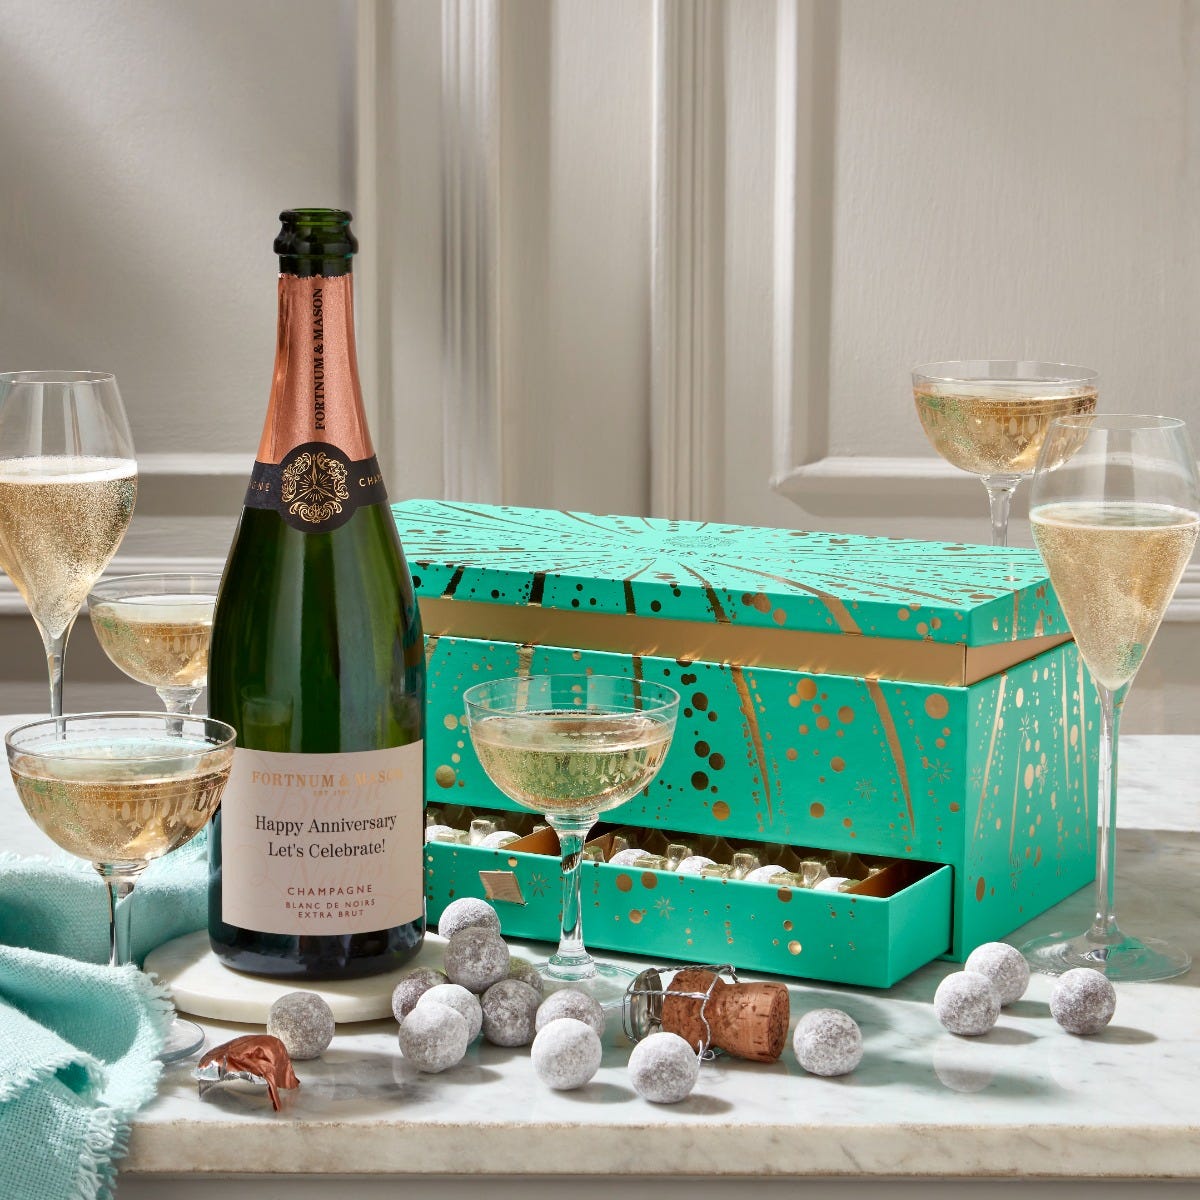 The Personalised Champagne & Chocolate Gift Box, Fortnum Mason